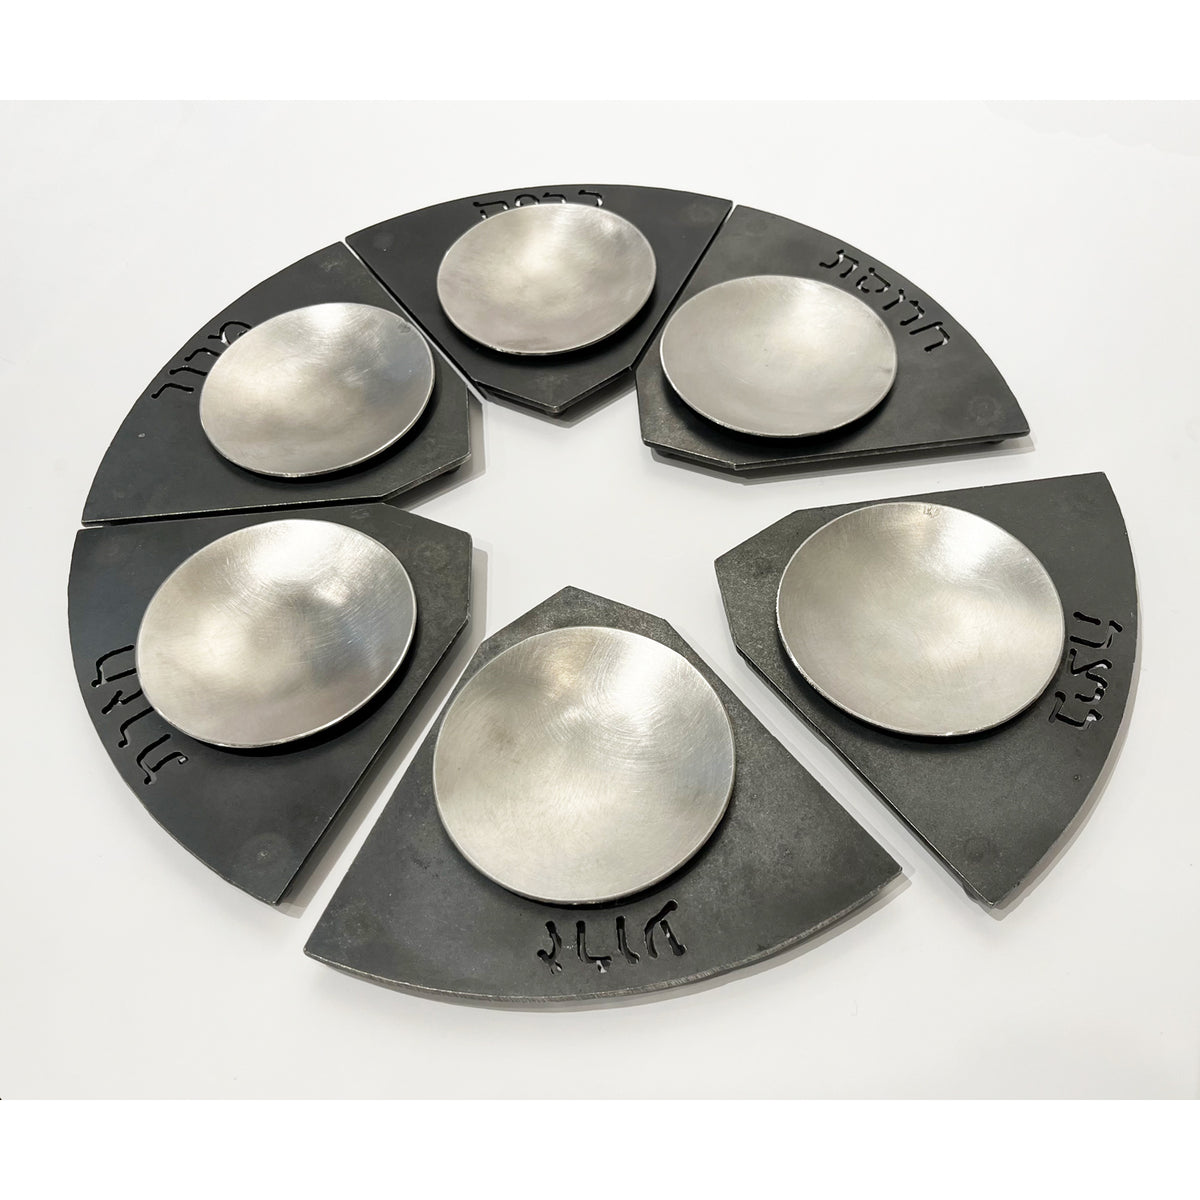 Modular Seder Plate - Stainless Steel Plates